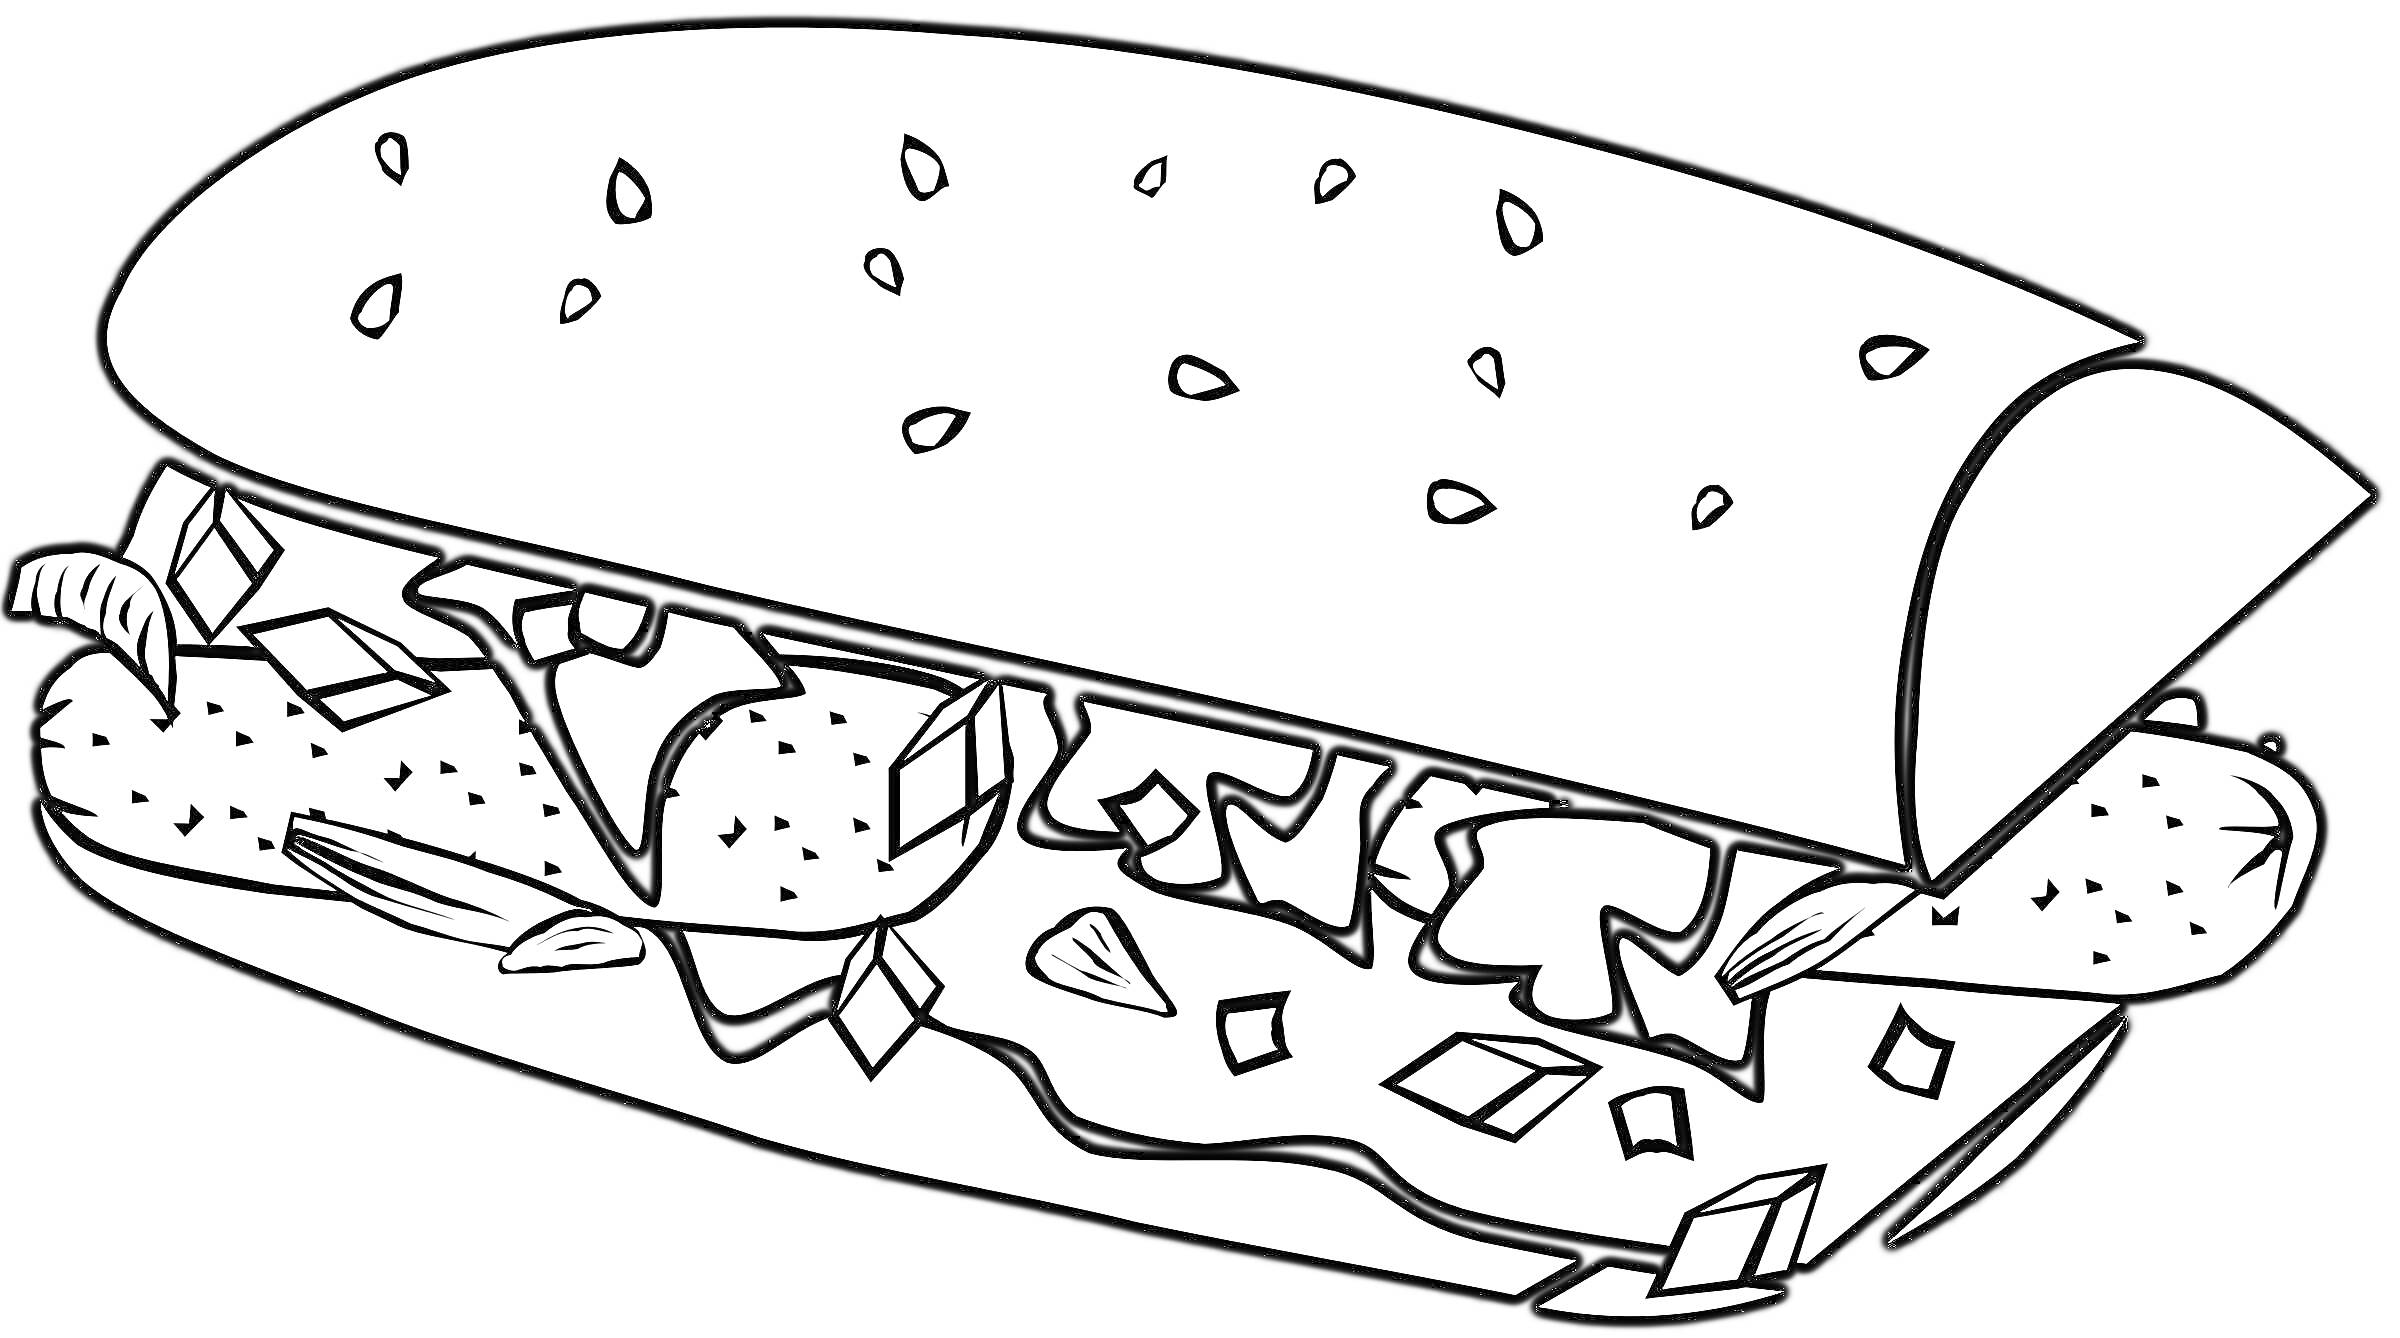 На раскраске изображено: Бутерброд, Сэндвич, Булочка, Салат, Лук, Помидор